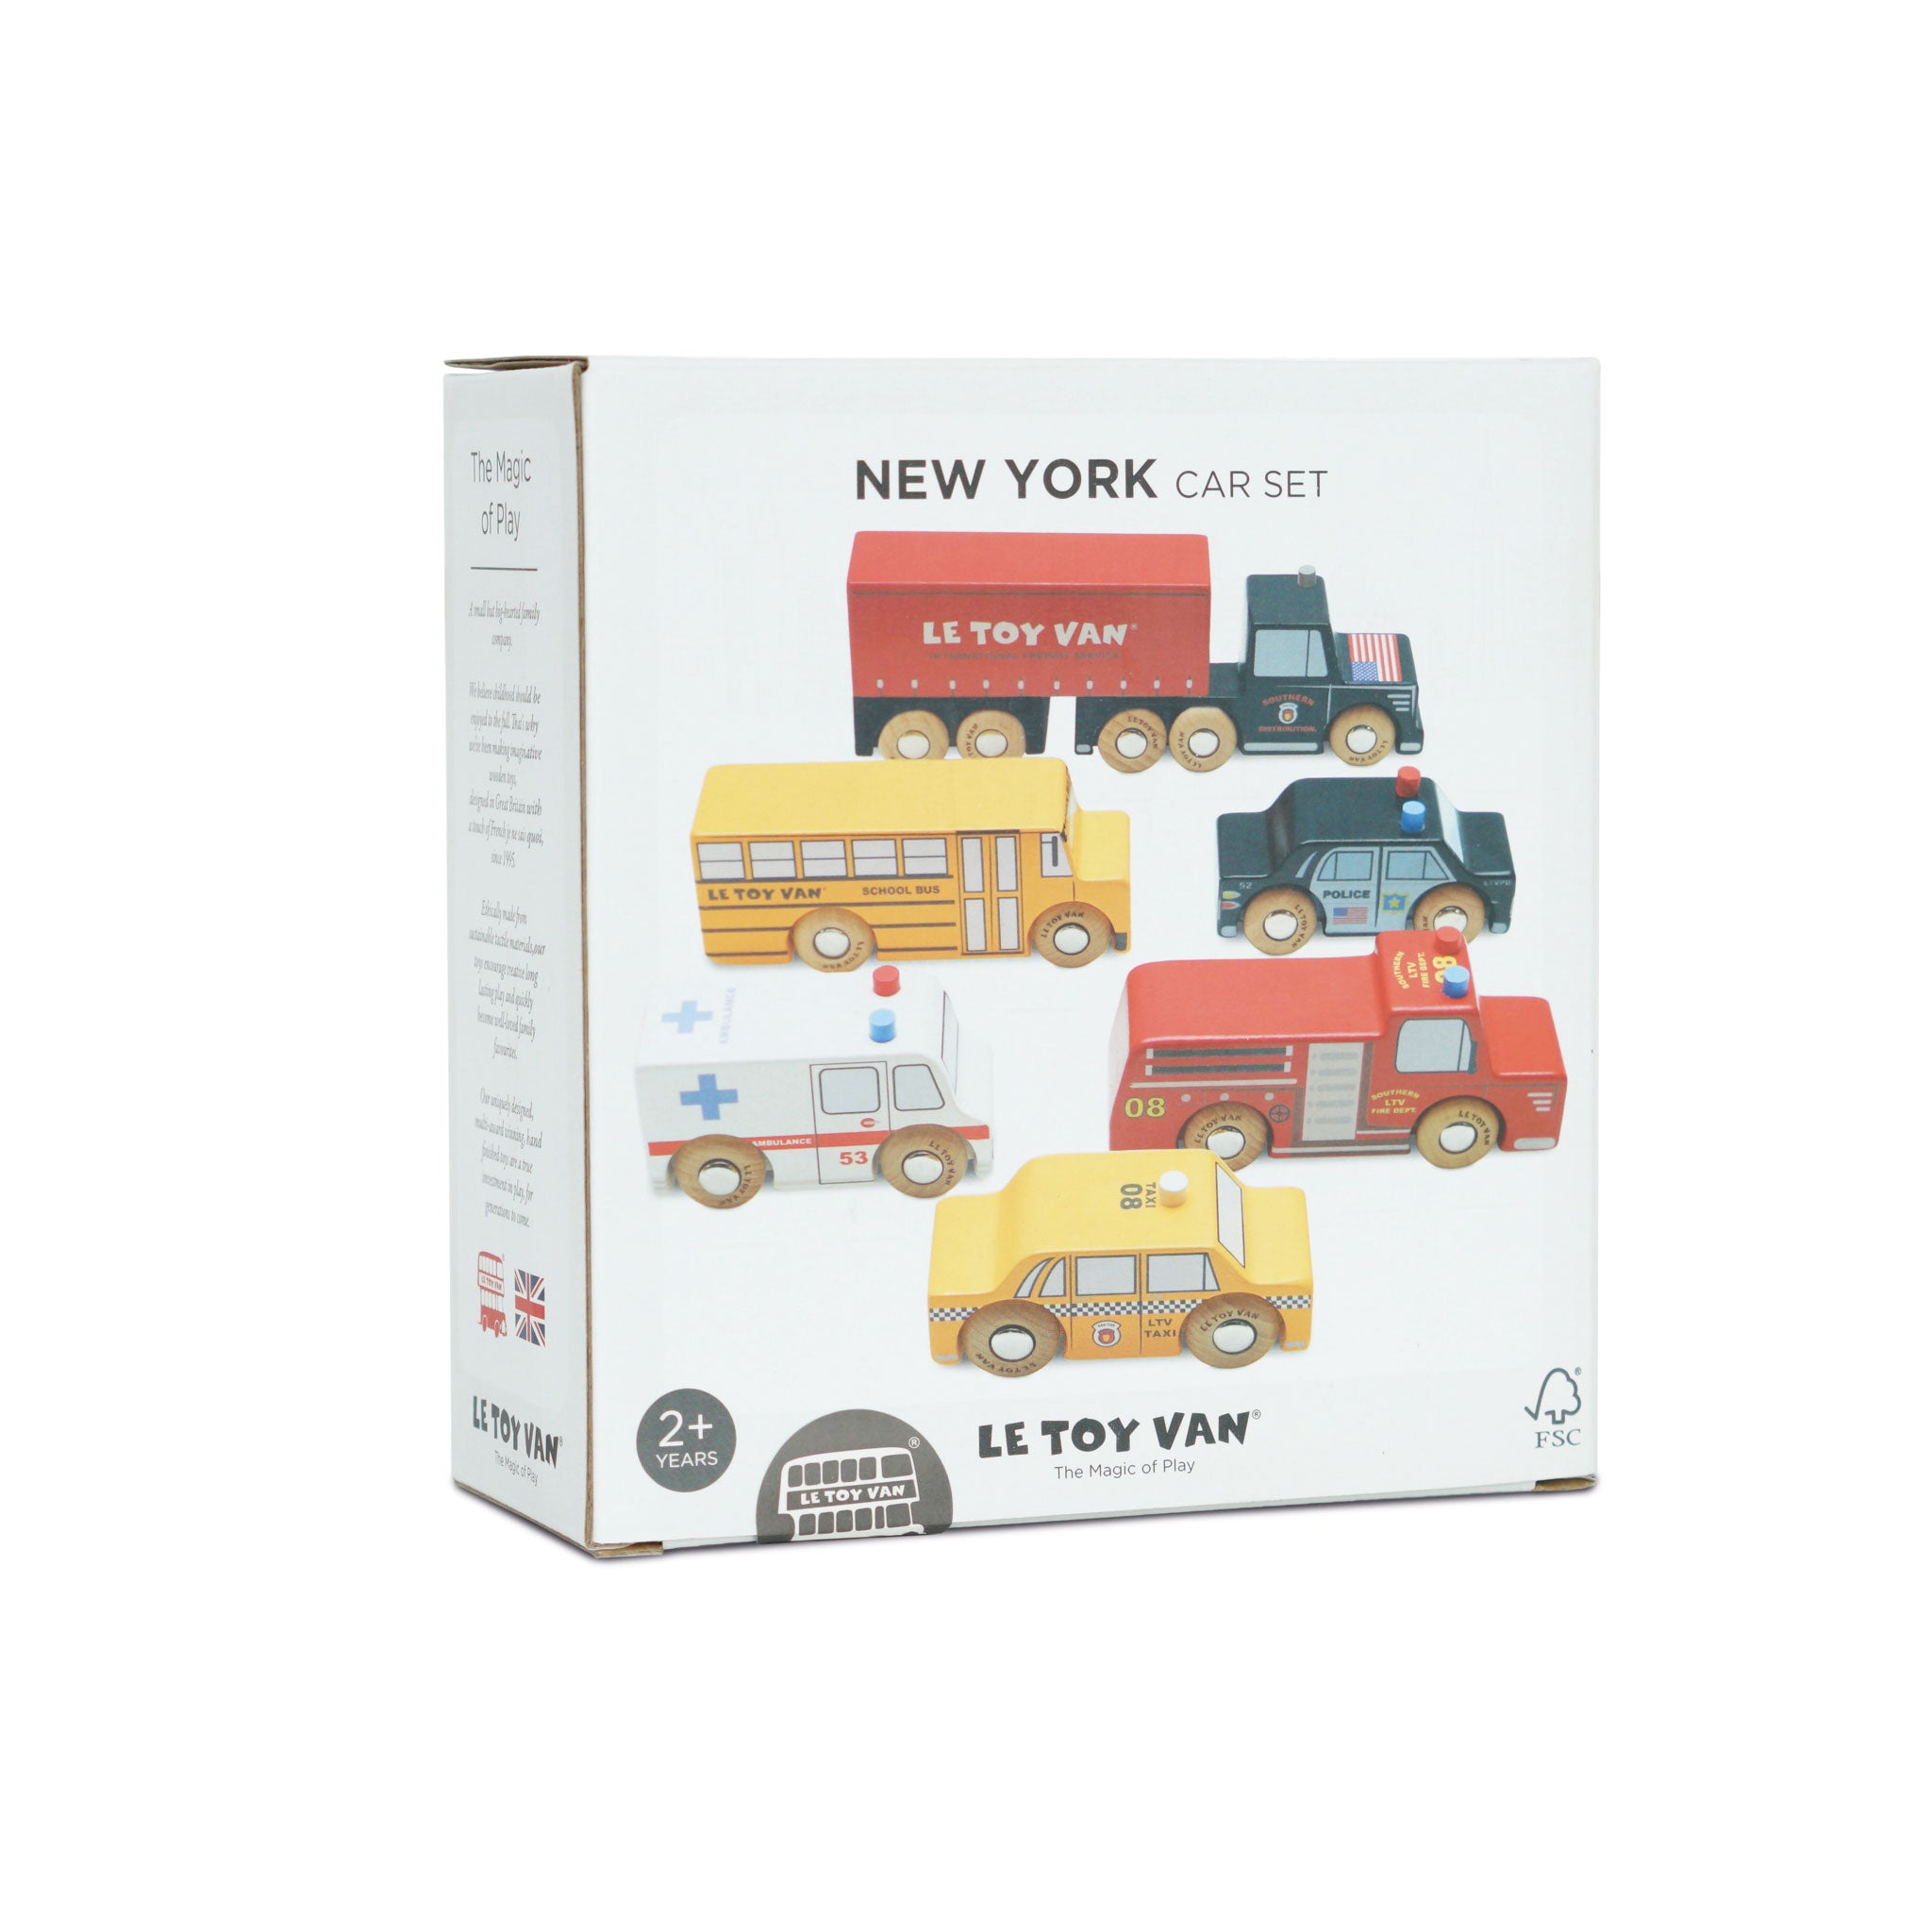 New York Toy Car Set